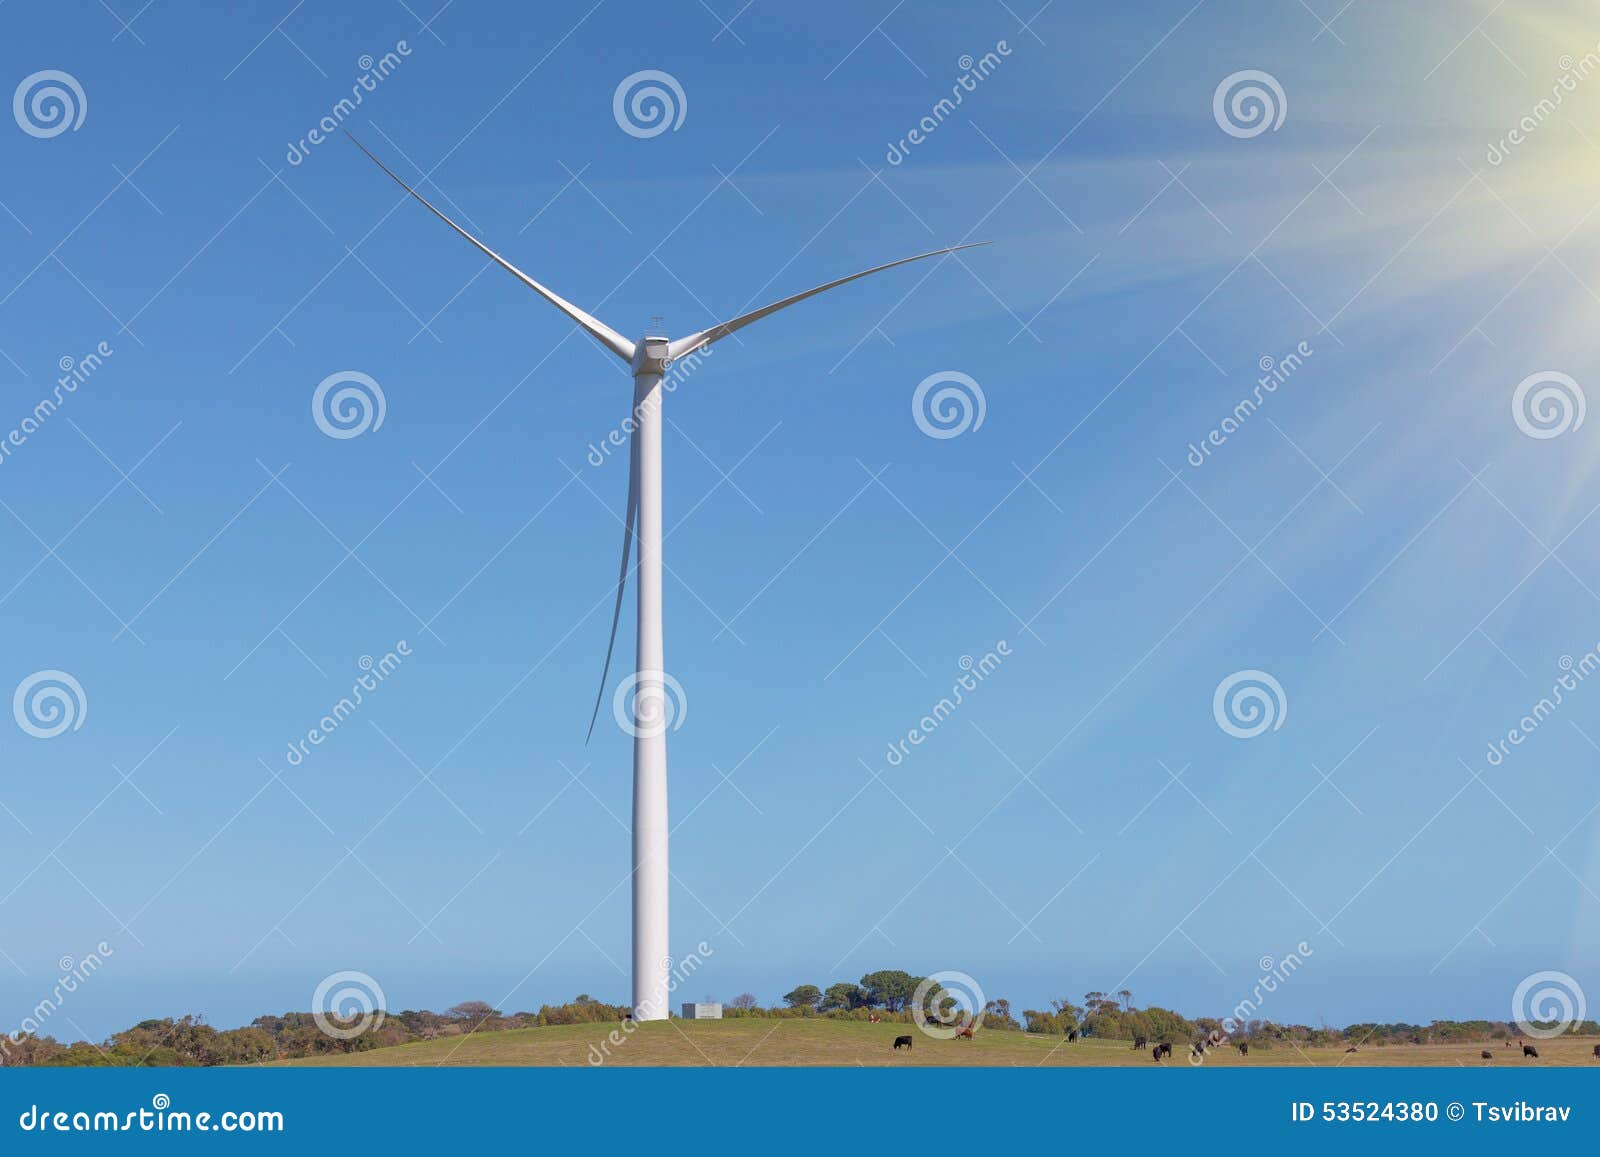 Electric Windmill - Sustainable Energy generation, Victoria, Australia 